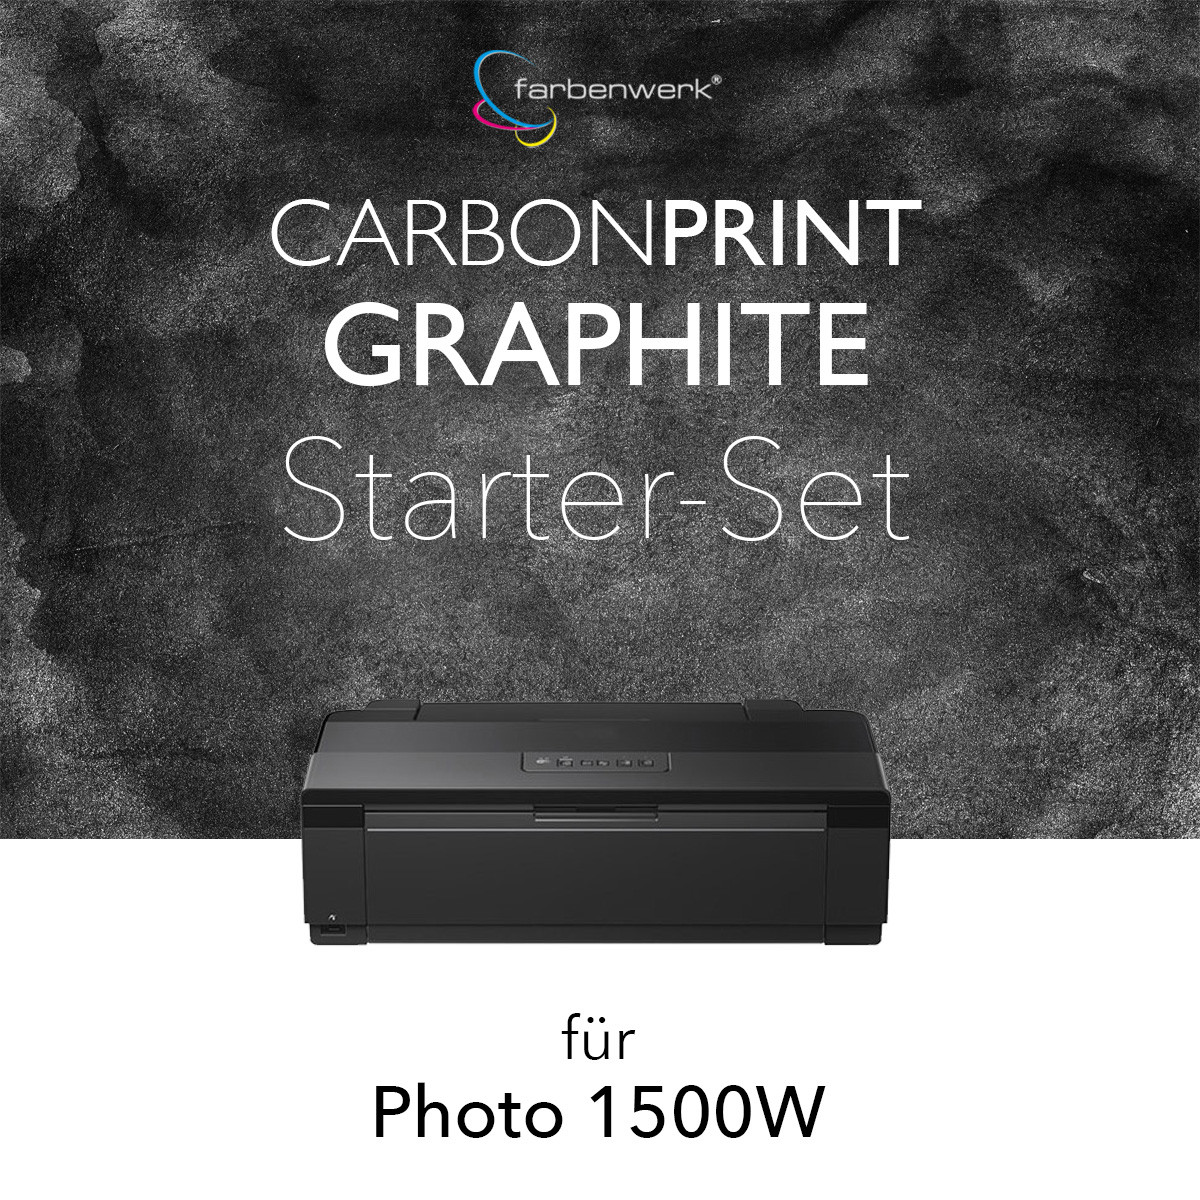 Starter-Set Carbonprint Graphite for Photo 1500W